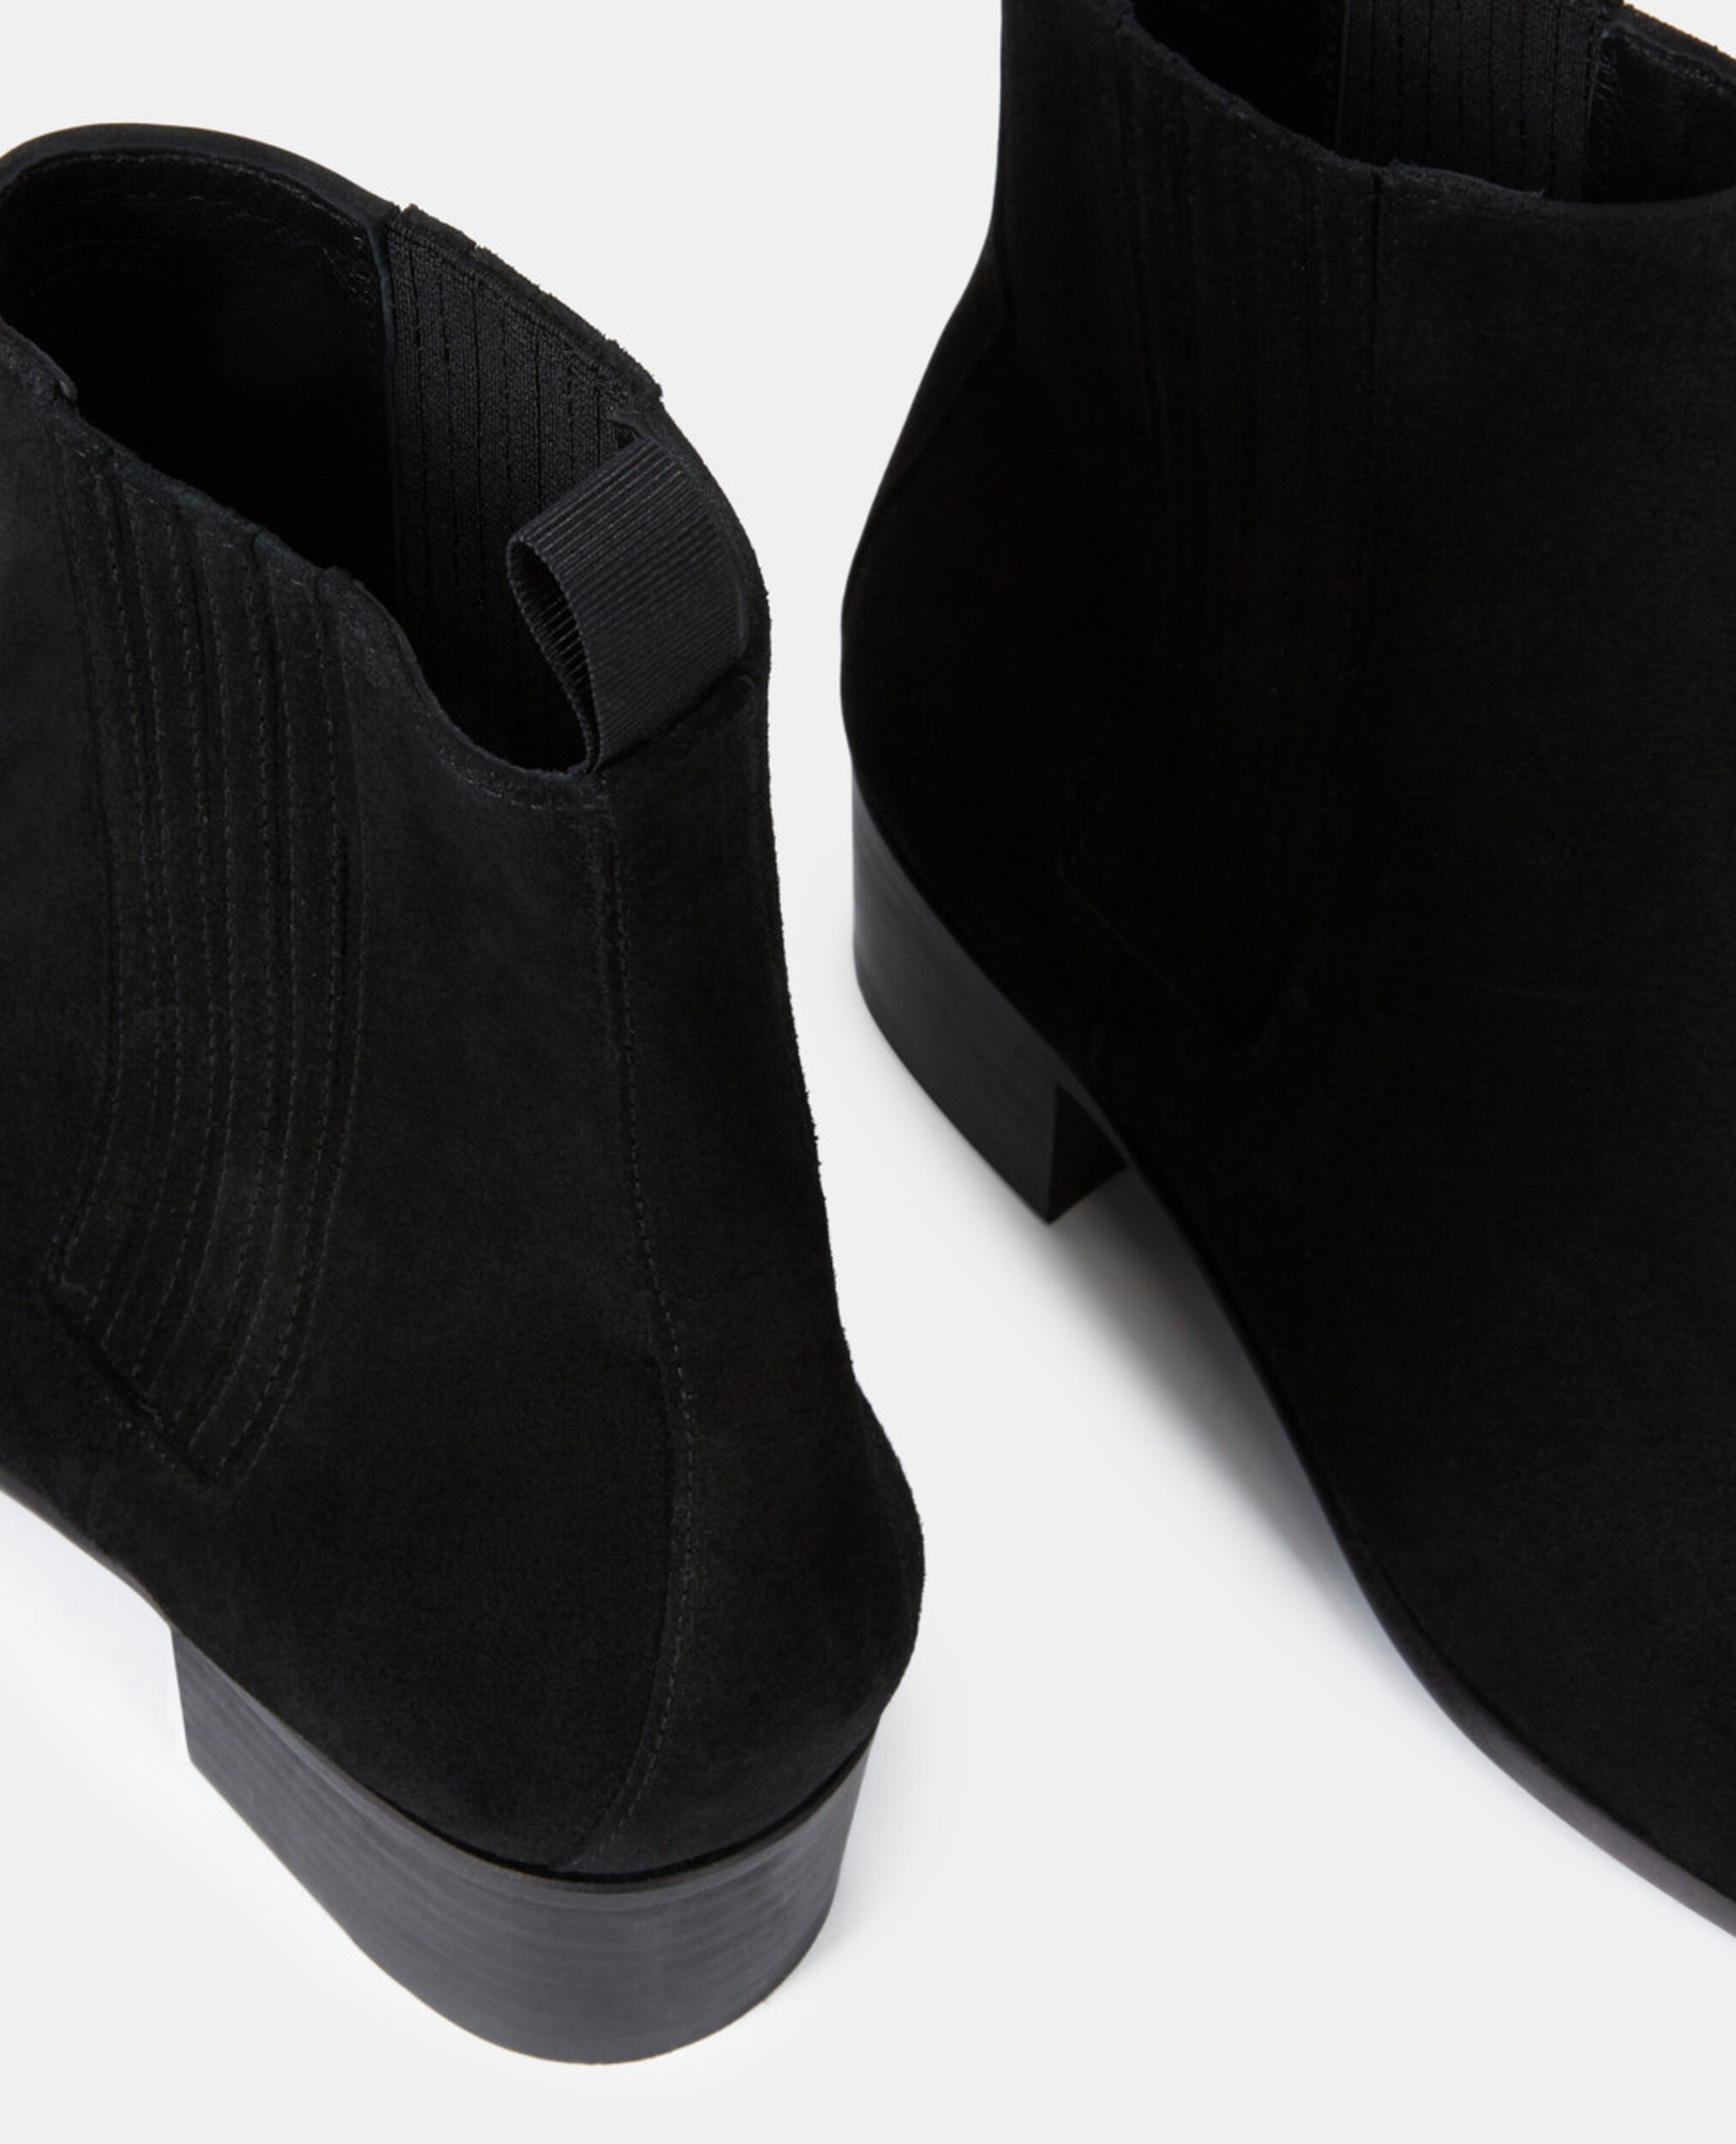 Black suede leather boots, BLACK, hi-res image number null